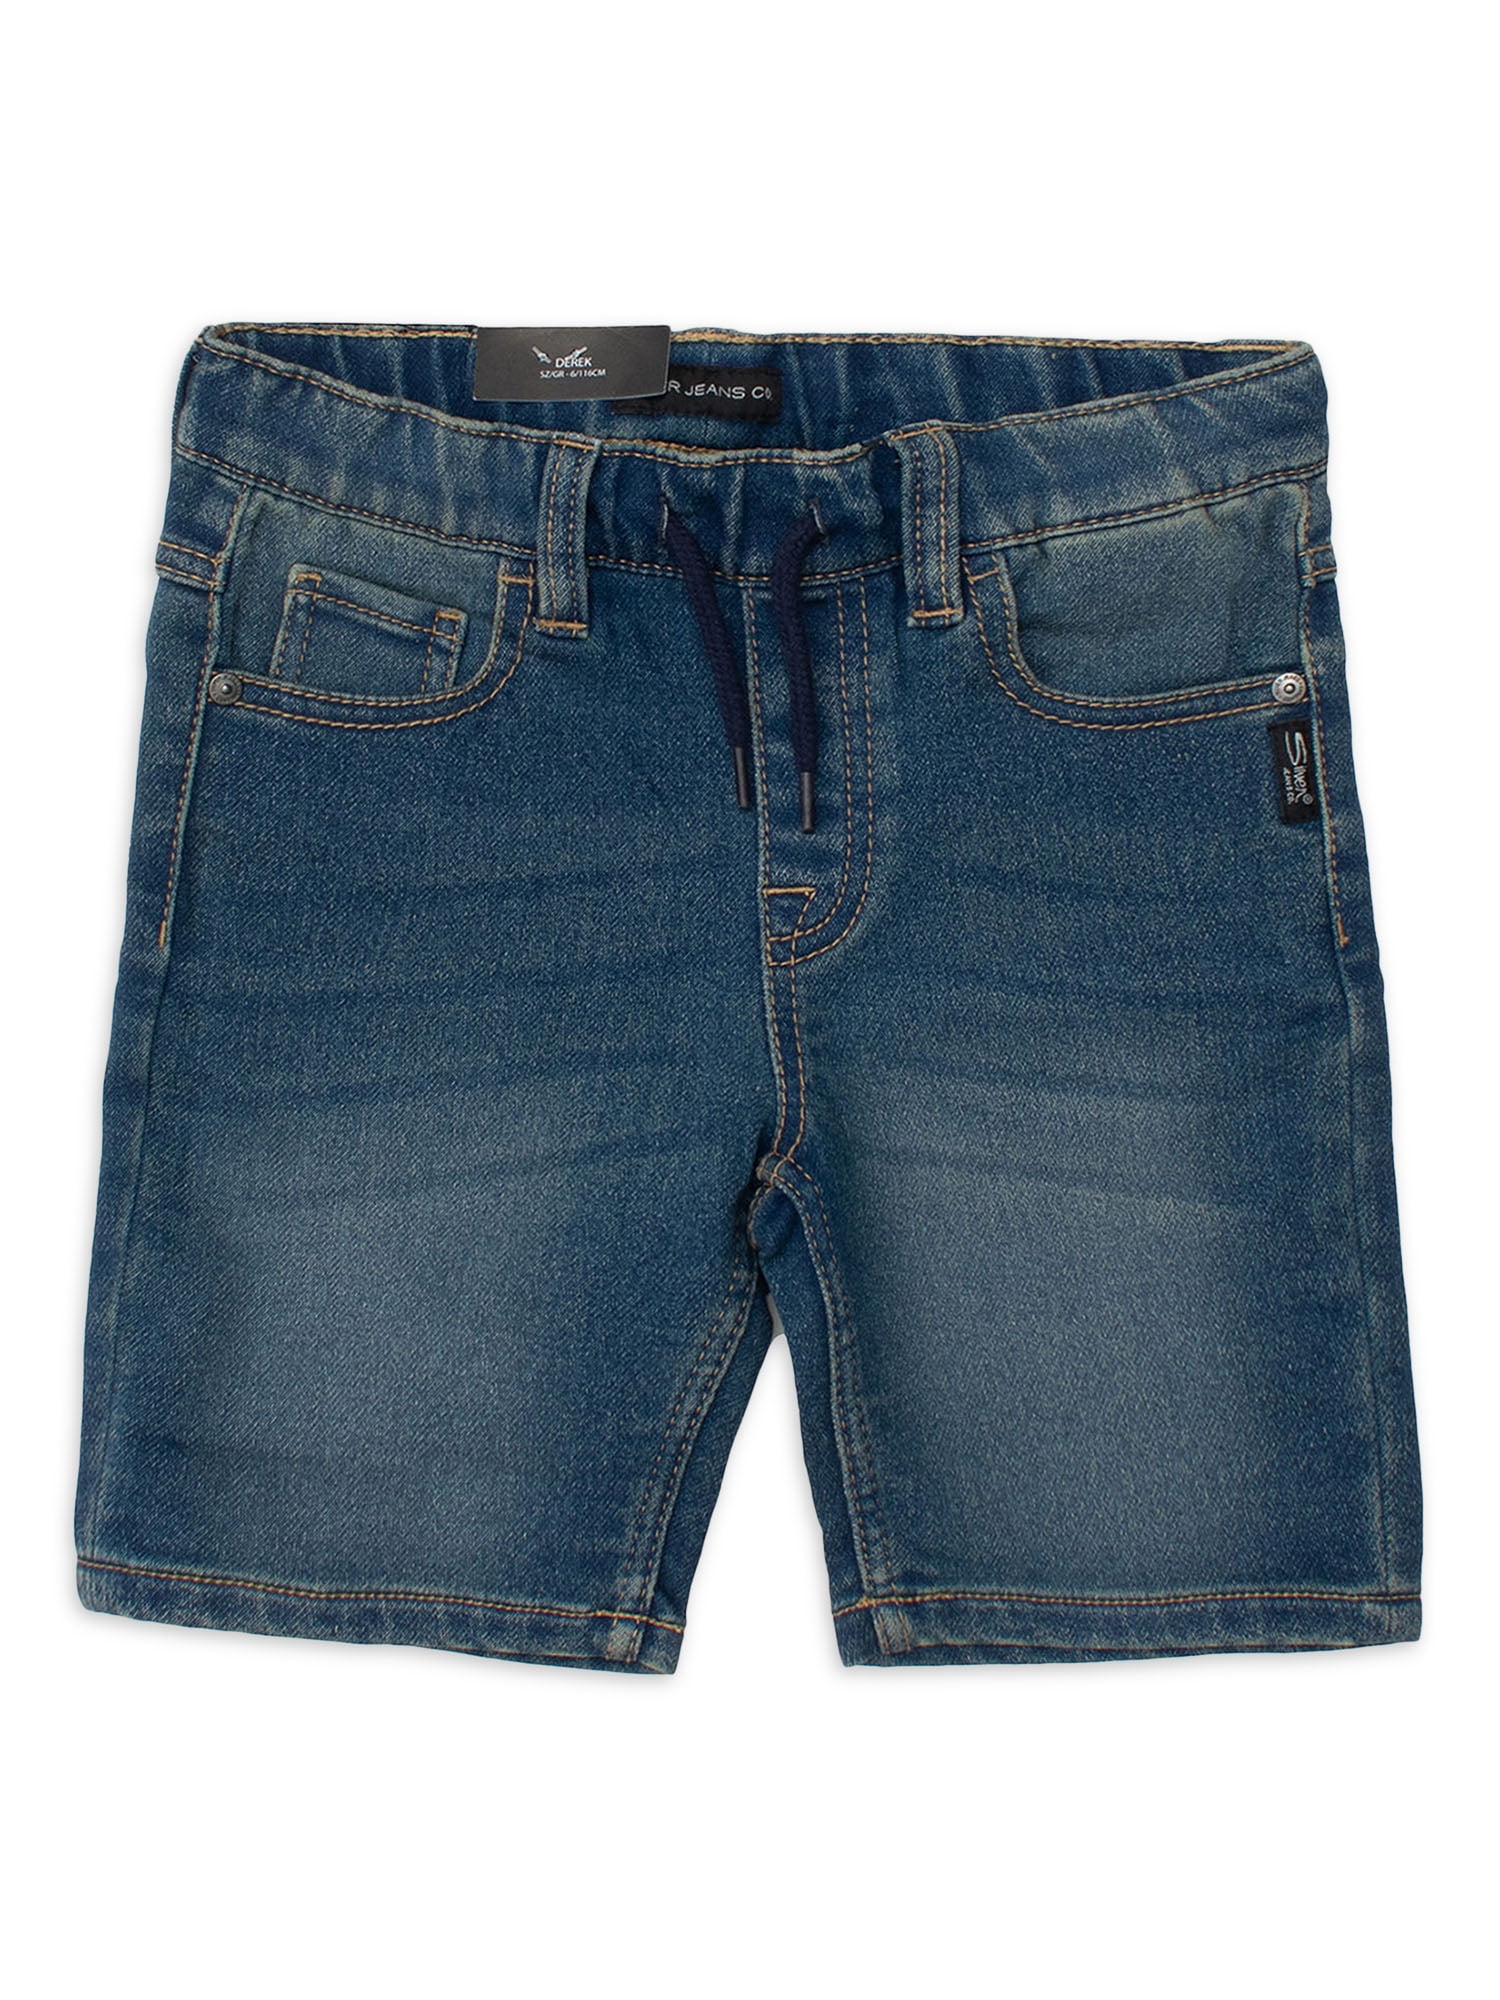 Boys Shorts boys shorts Size 1 boys pants and 4 Super Cheap. 2,3 